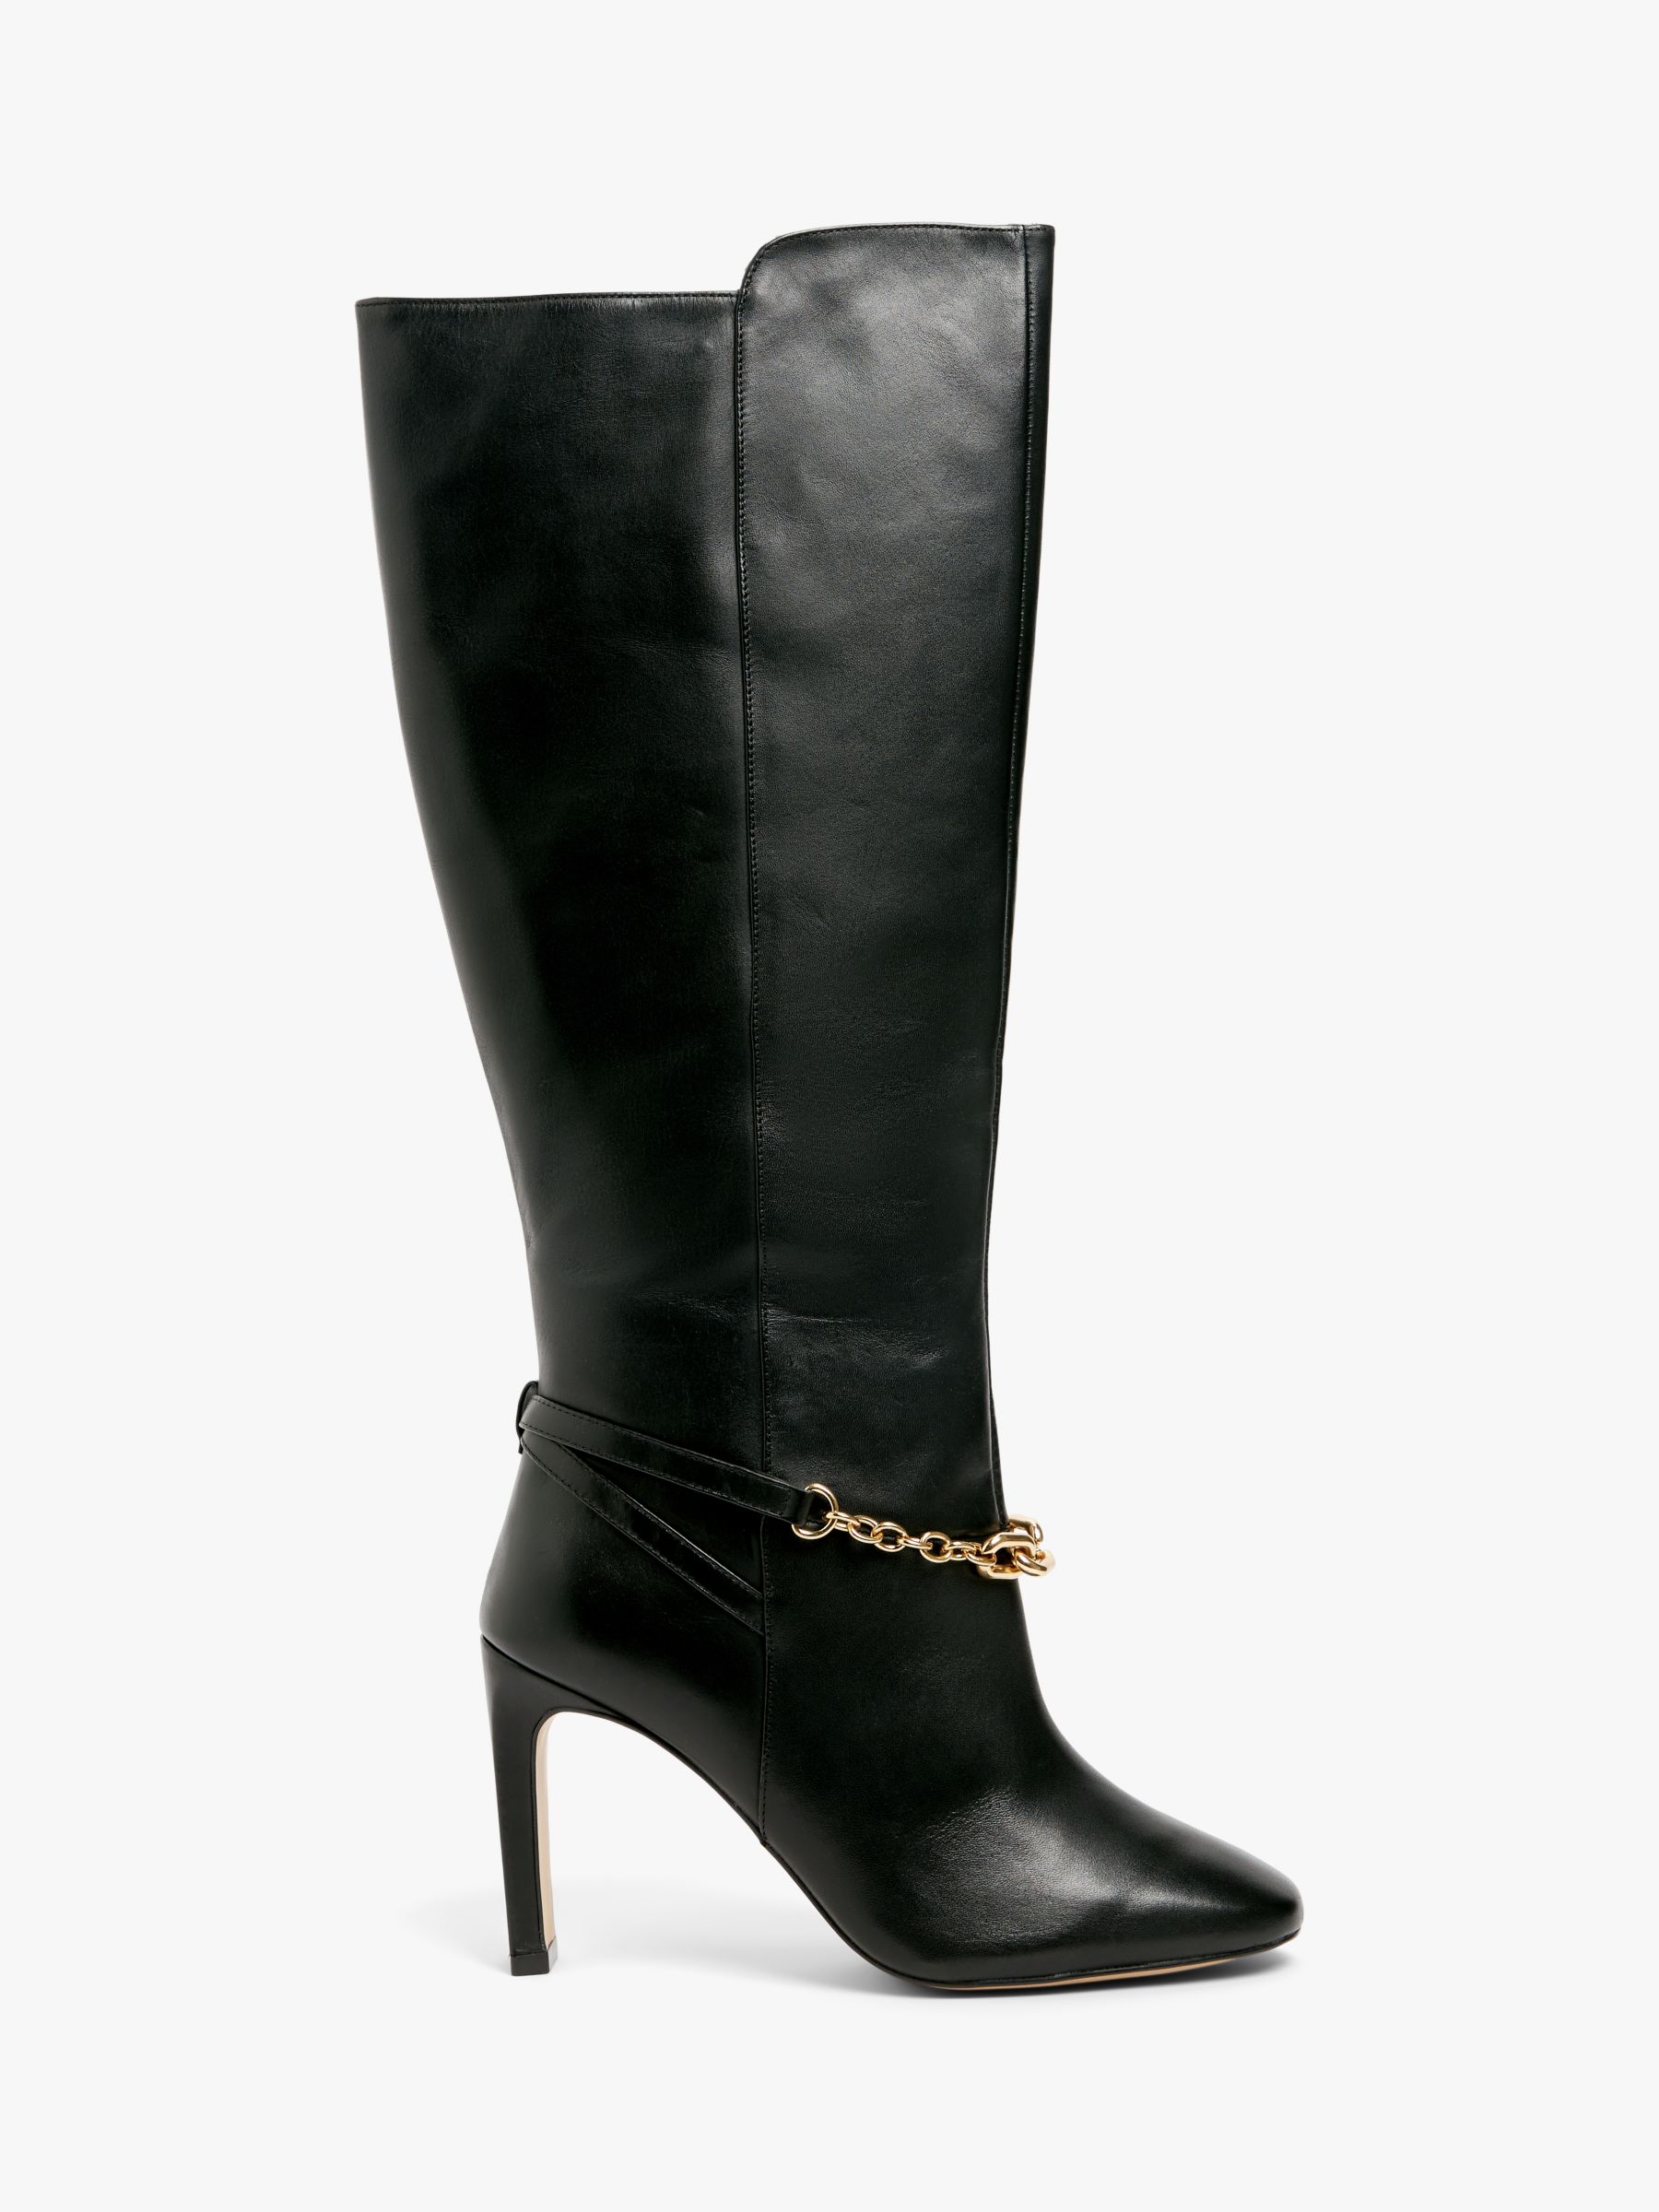 John Lewis Sapphire Chain Detail High Heel Long Boots, Black, 6